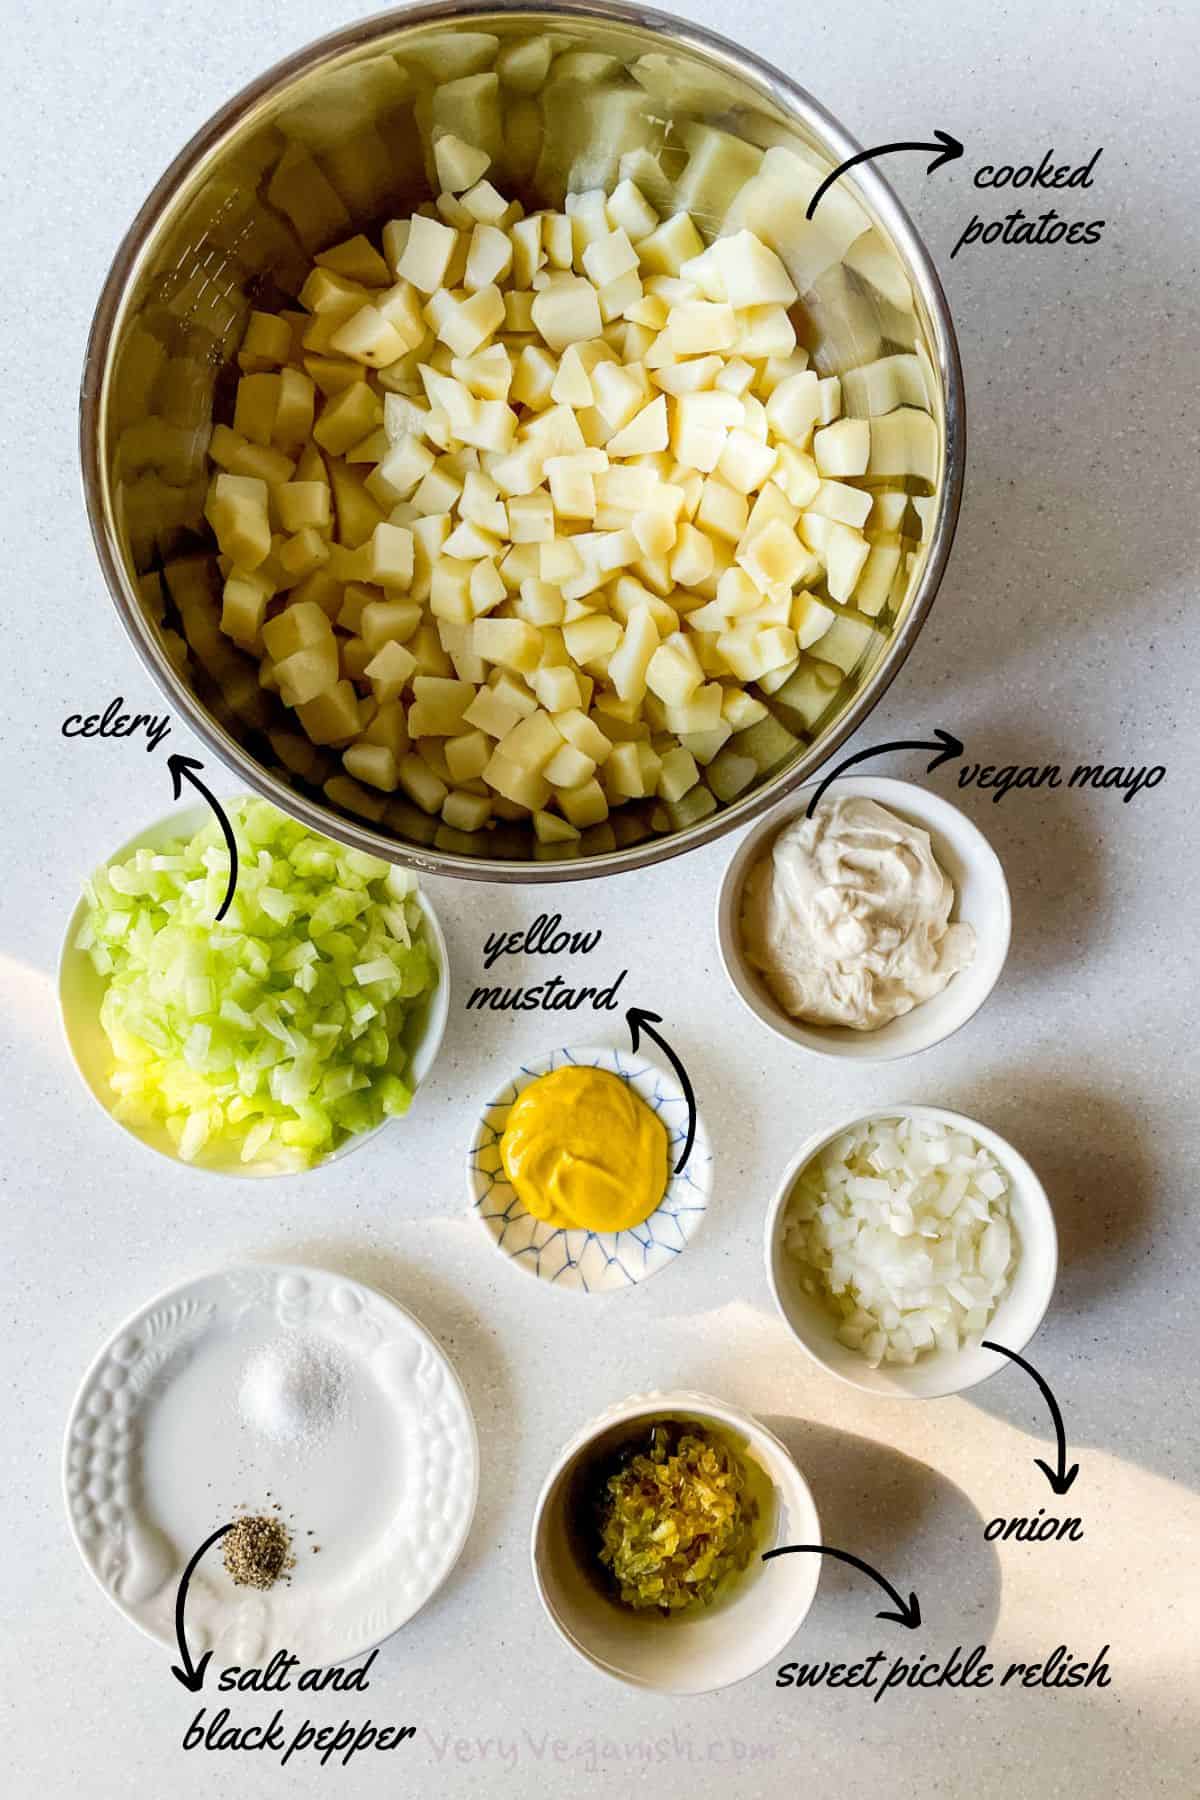 Ingredients: cooked potatoes, celery, vegan mayo, yellow mustard, onion, sweet pickle relish, salt and black pepper